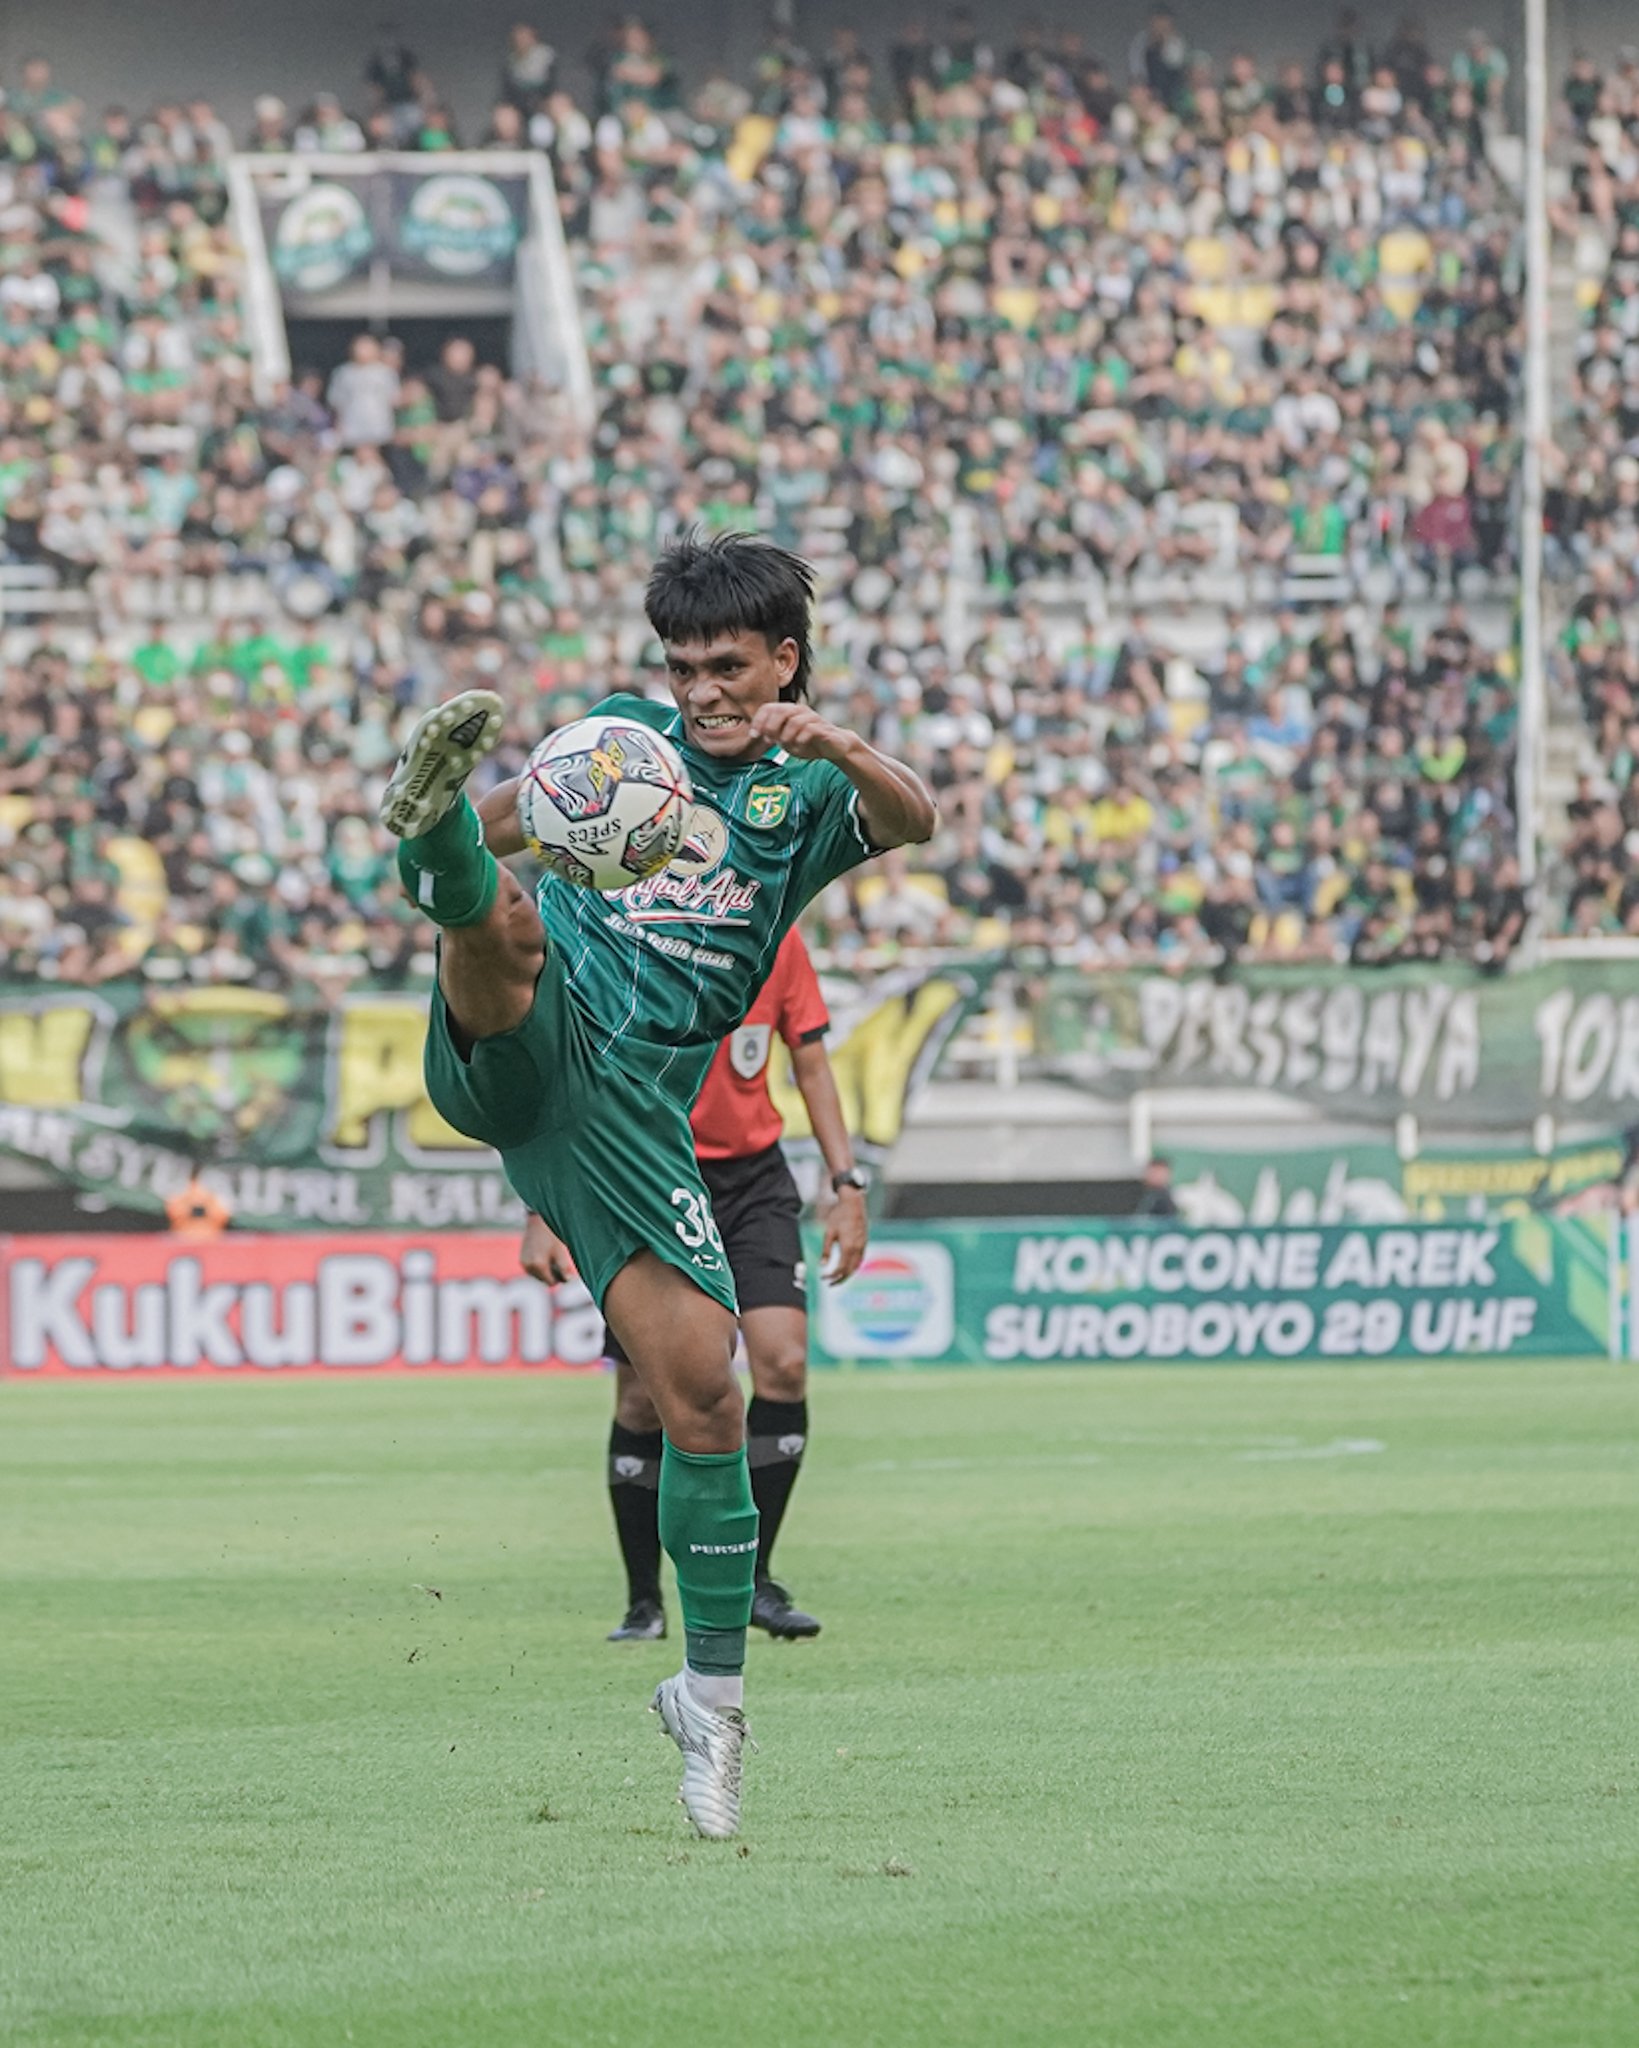 PERSIB Kecolongan? Talenta Muda Garut Bersinar di Persebaya, Jadi Fenomenal Baru Sepakbola Indonesia